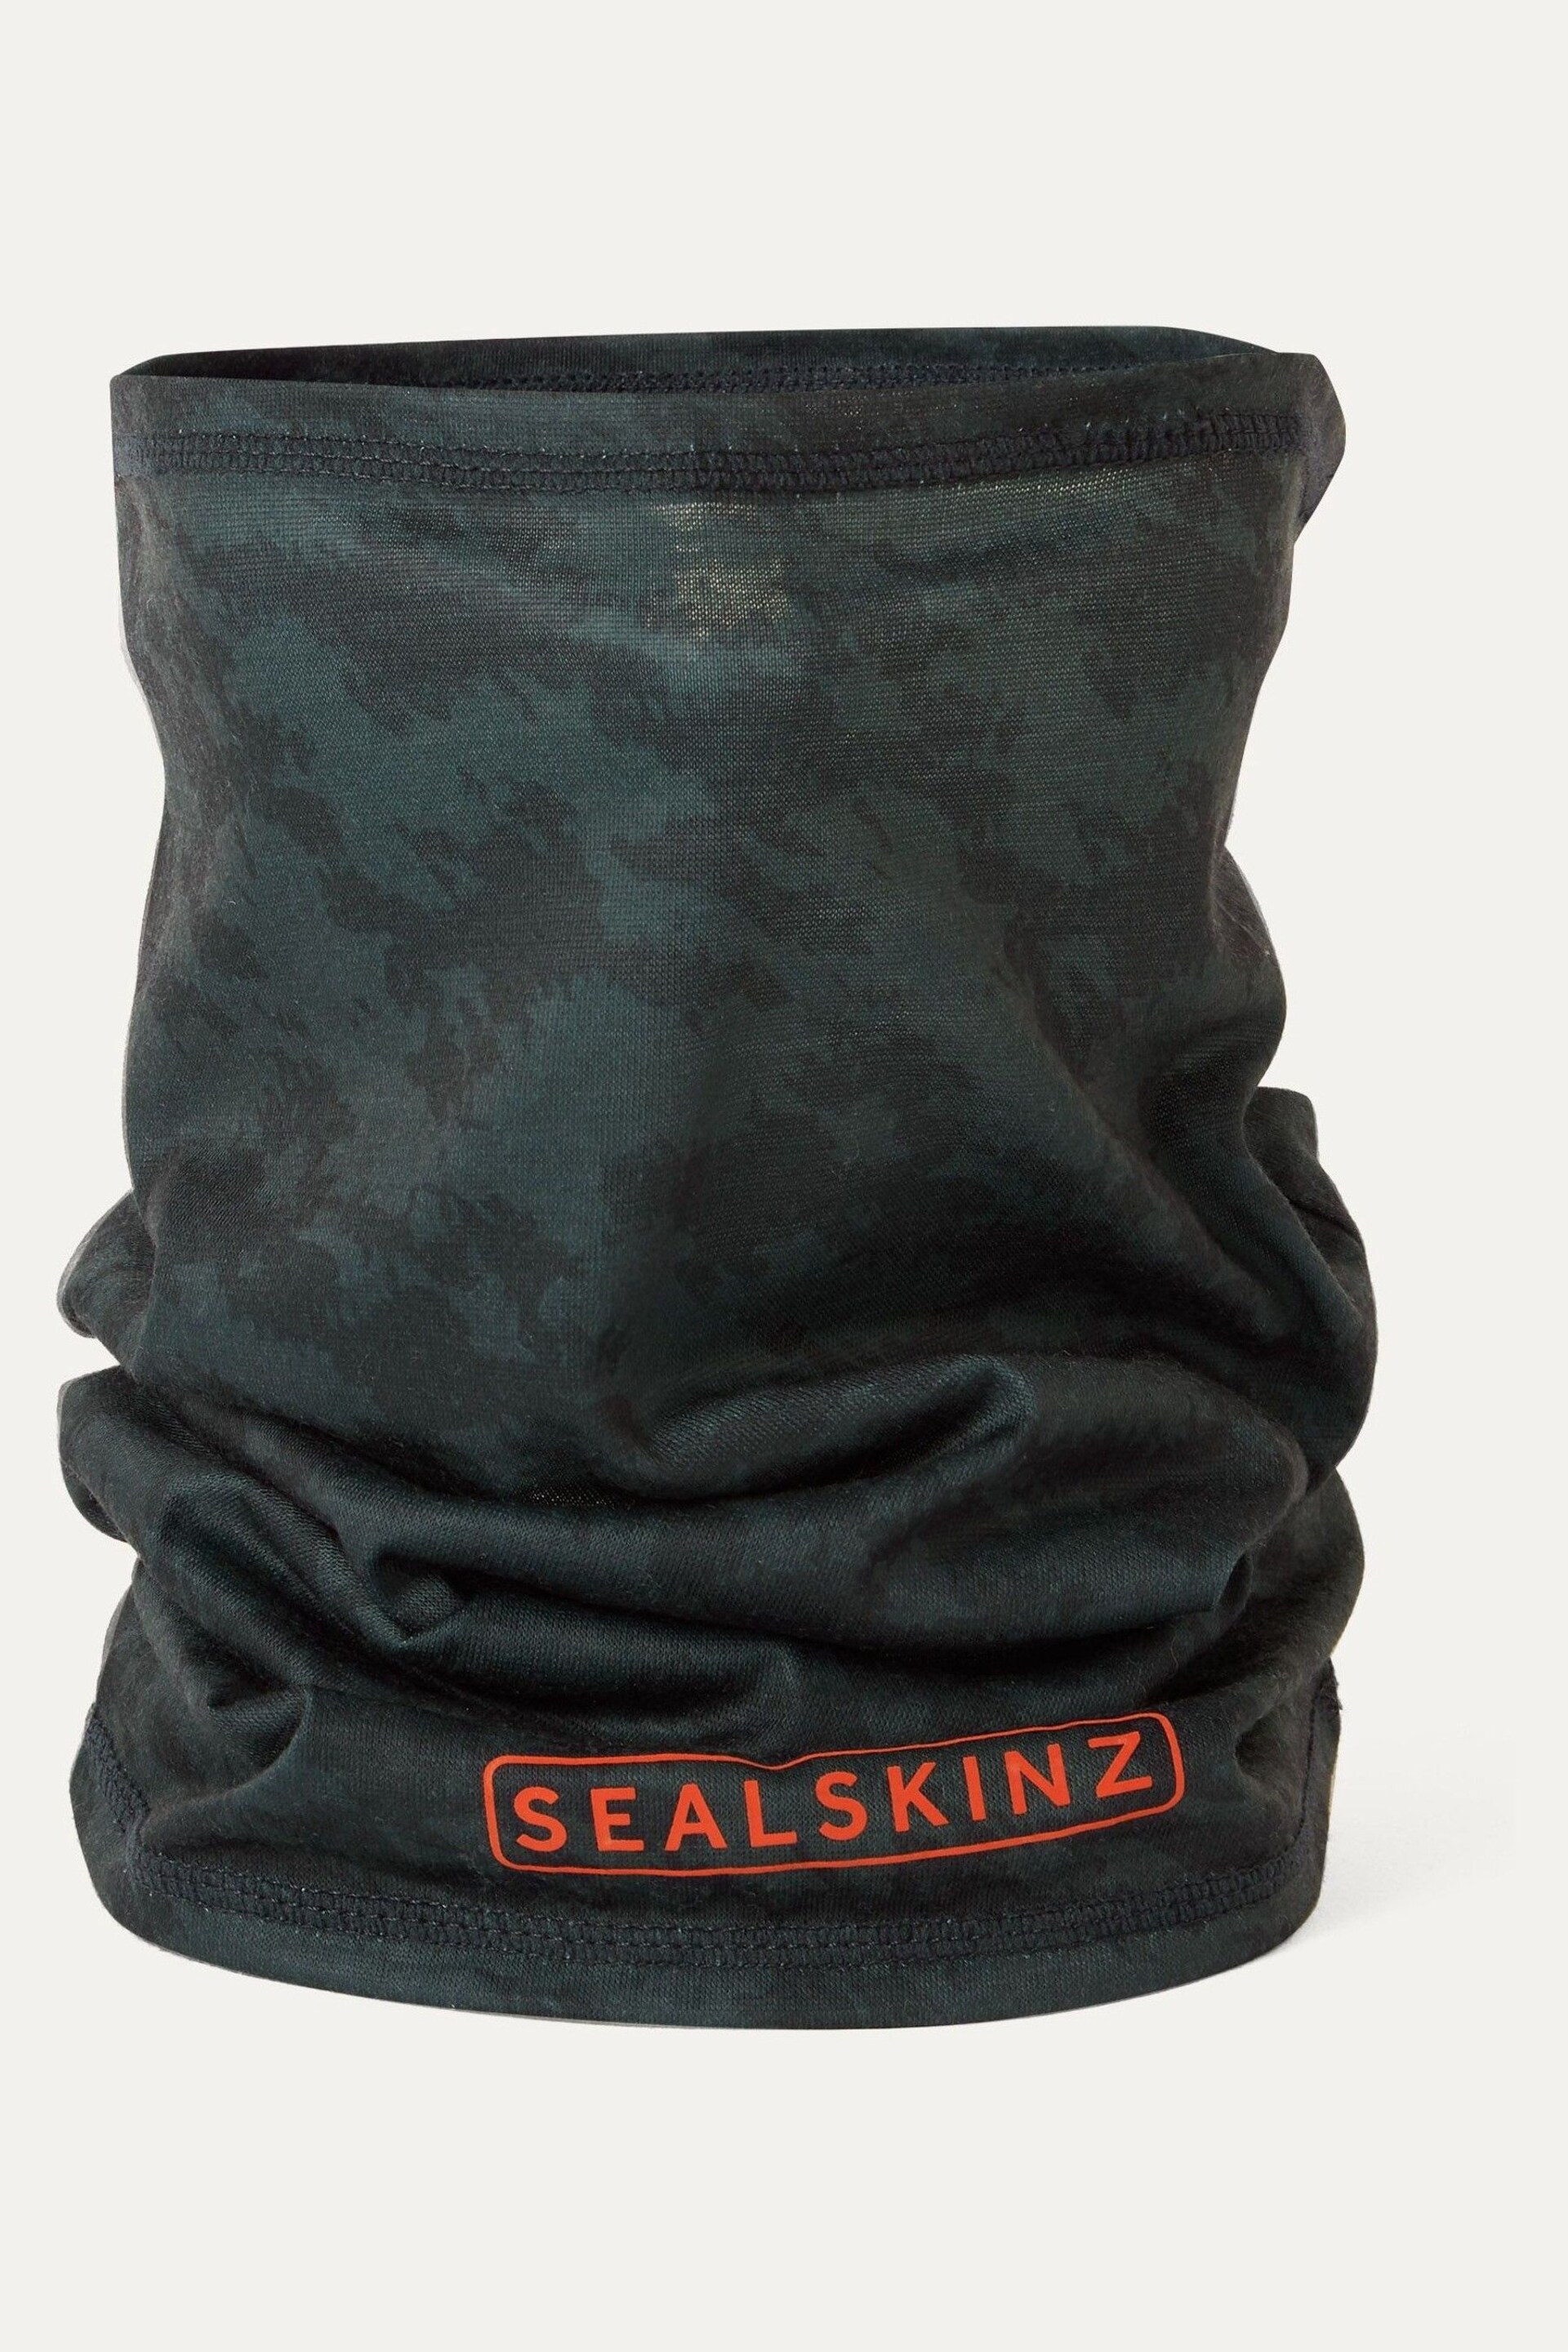 Sealskinz Harpley Water Repellent Neck Warmer Scarf - Image 1 of 1